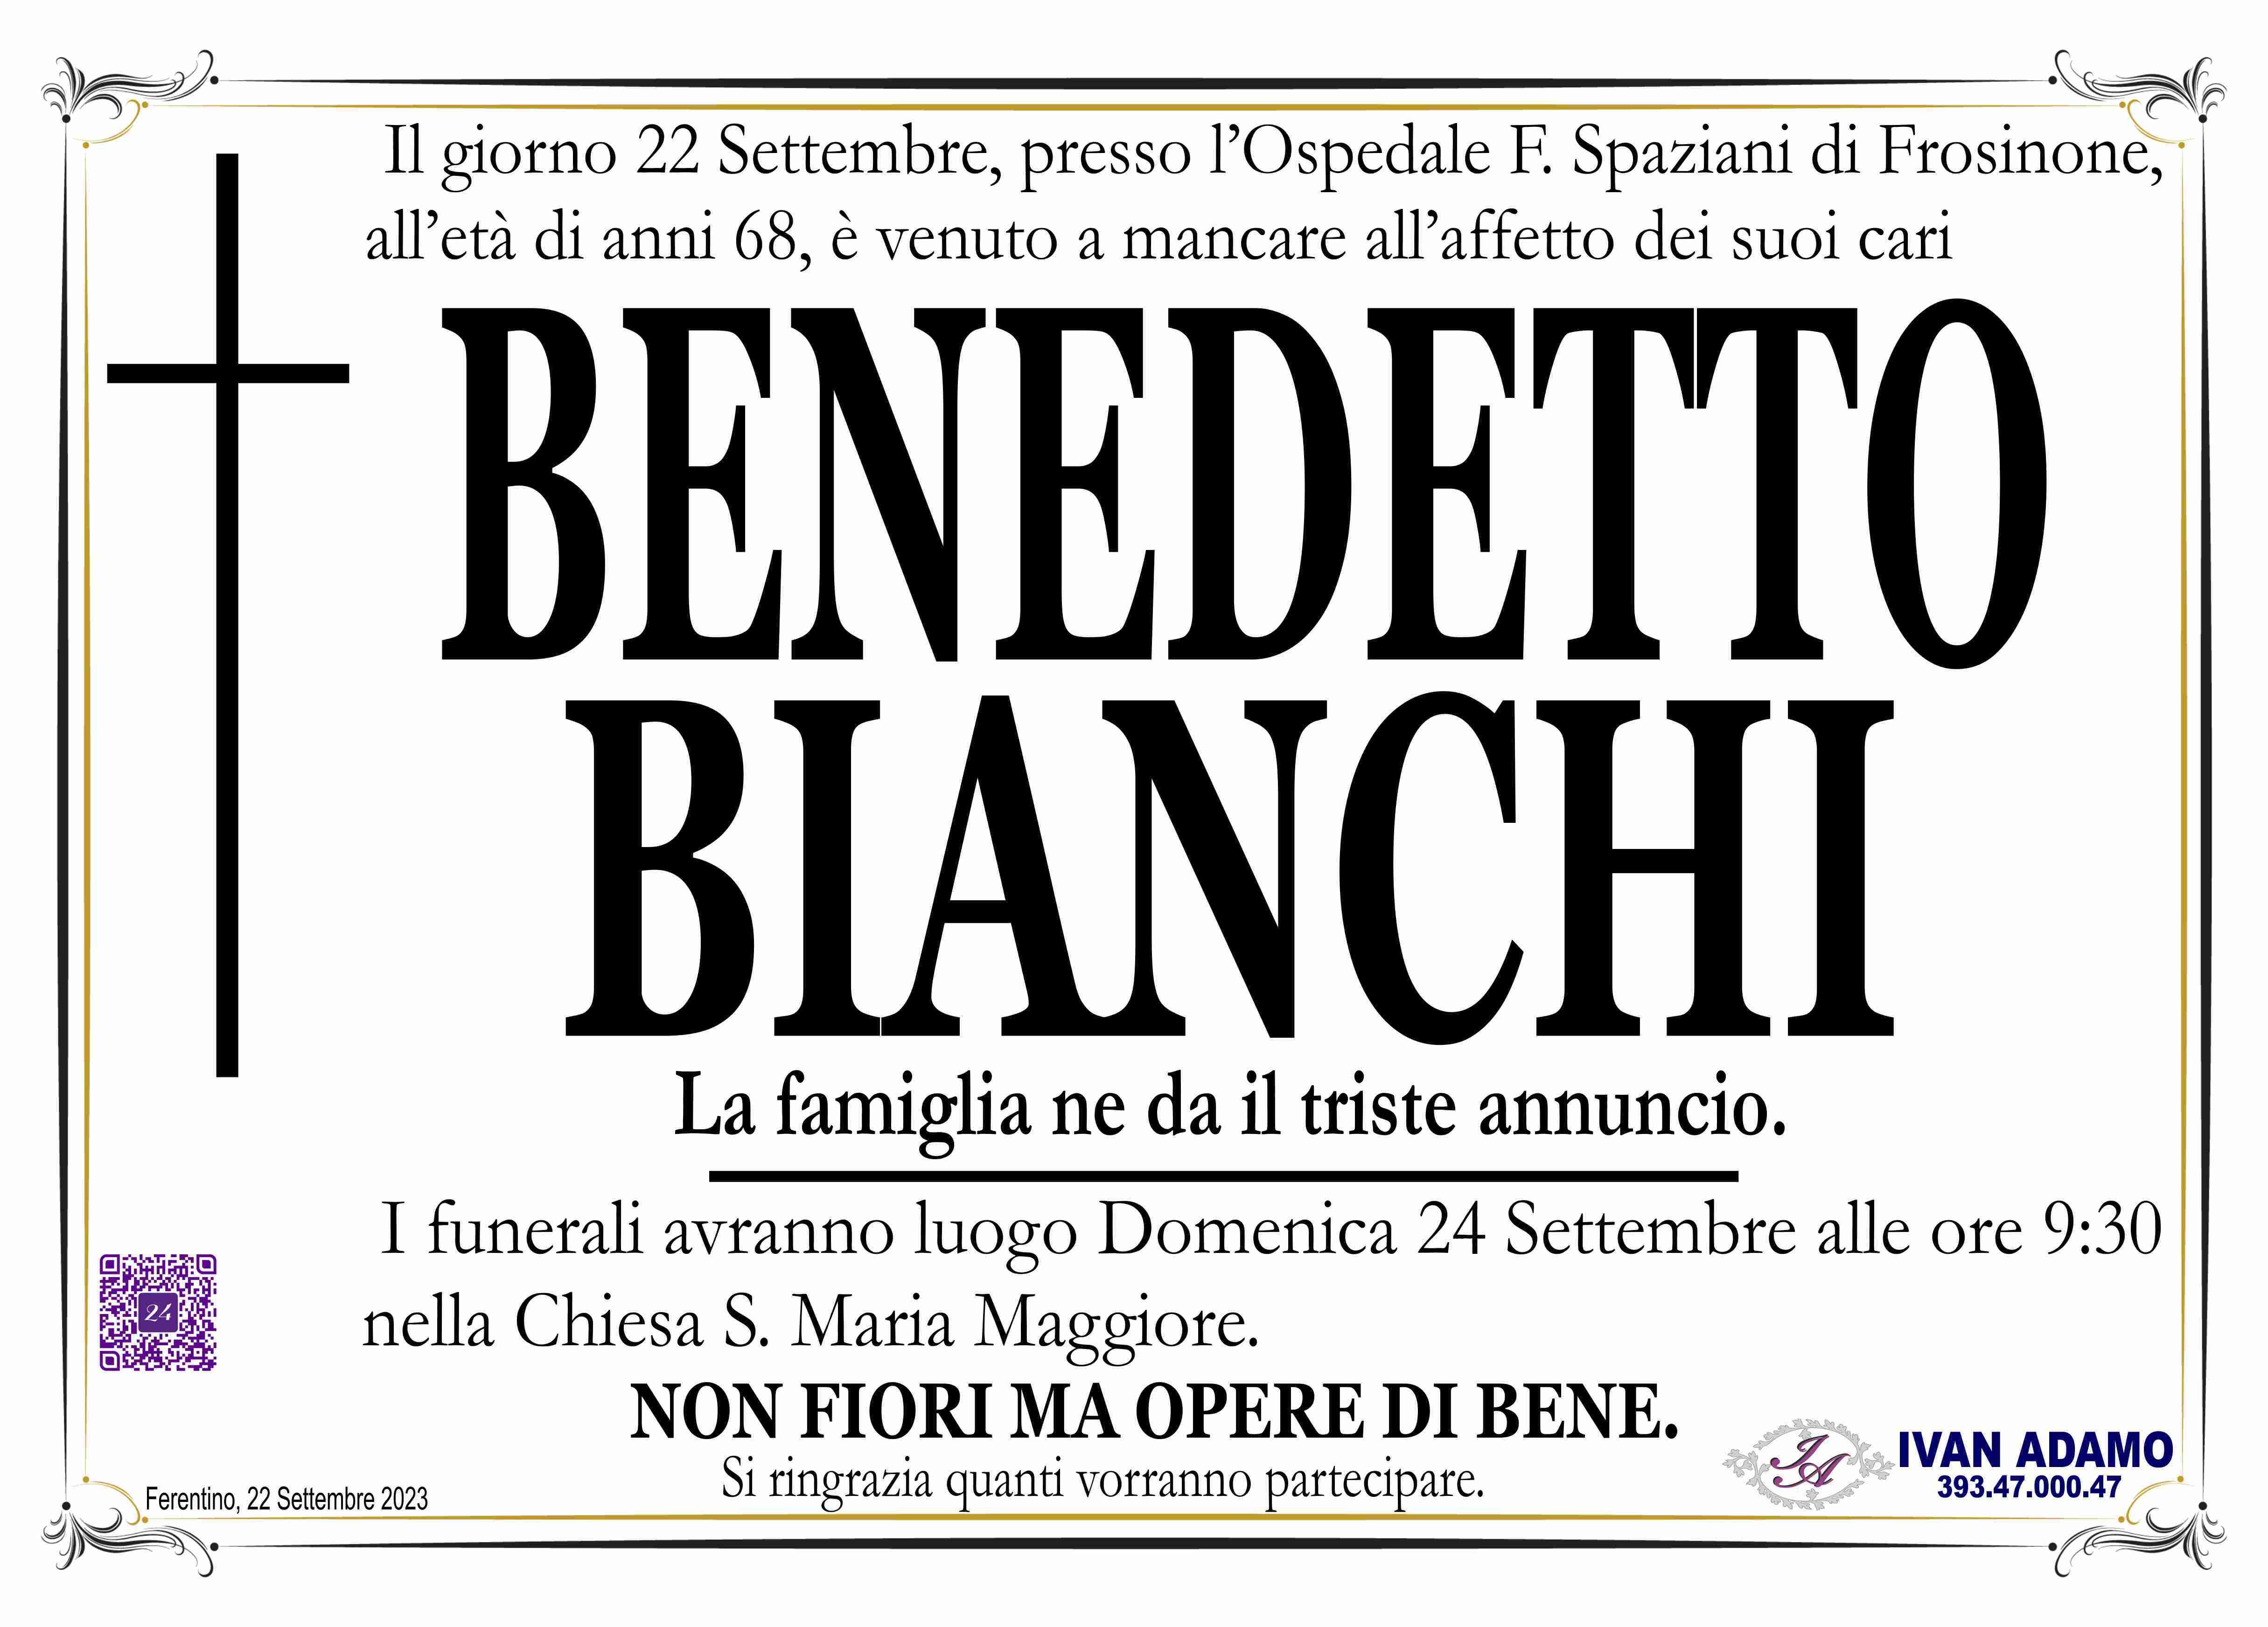 Benedetto Bianchi